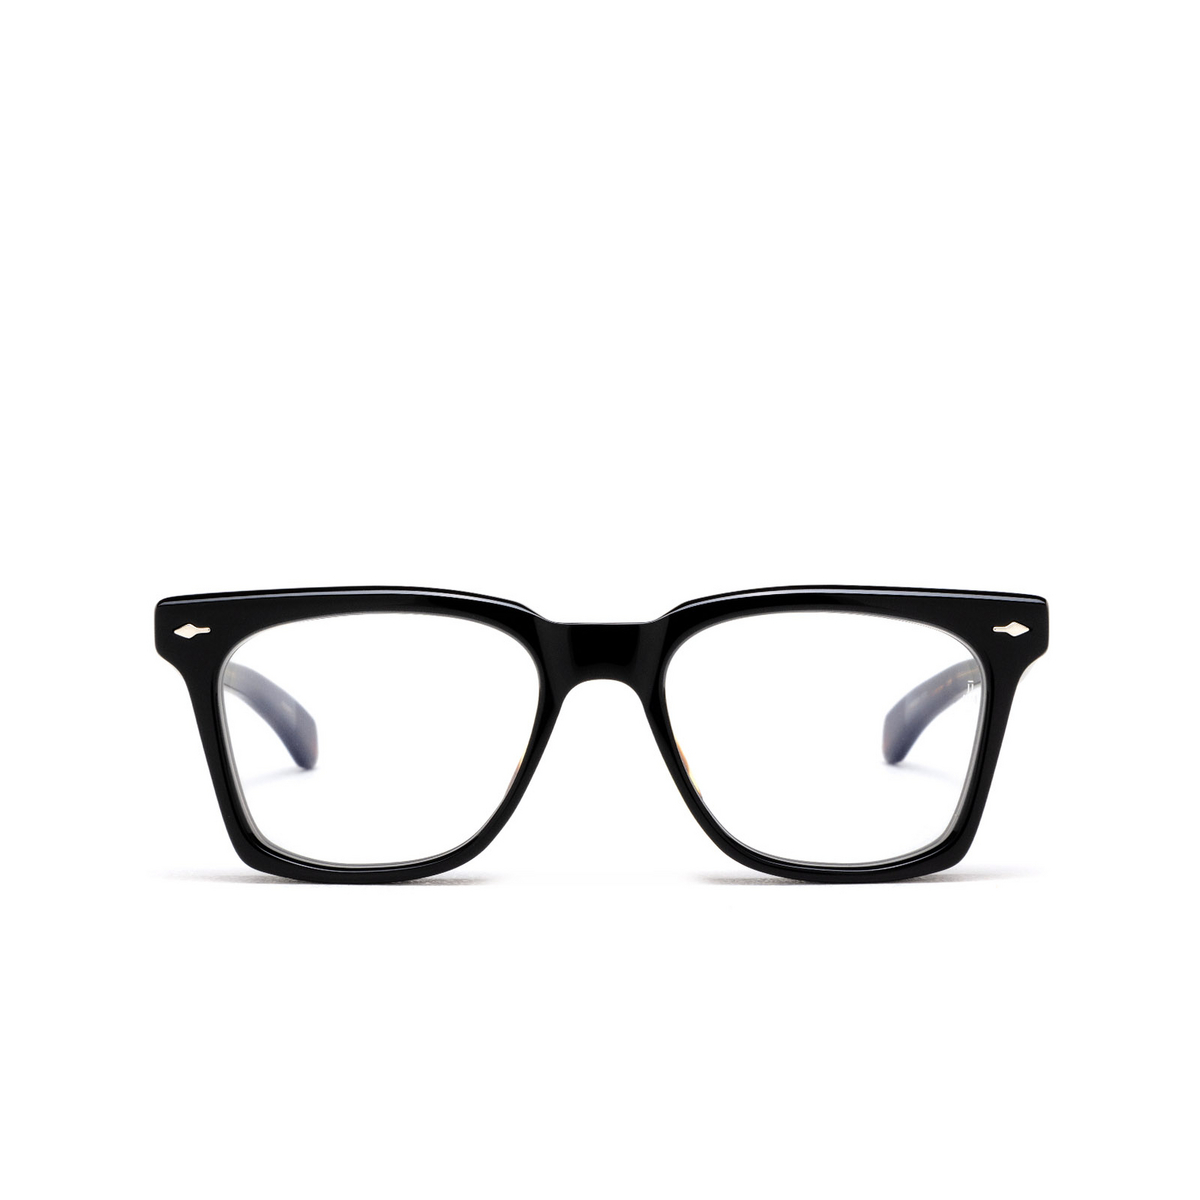 Jacques Marie Mage HERBIE Eyeglasses NOIR - front view